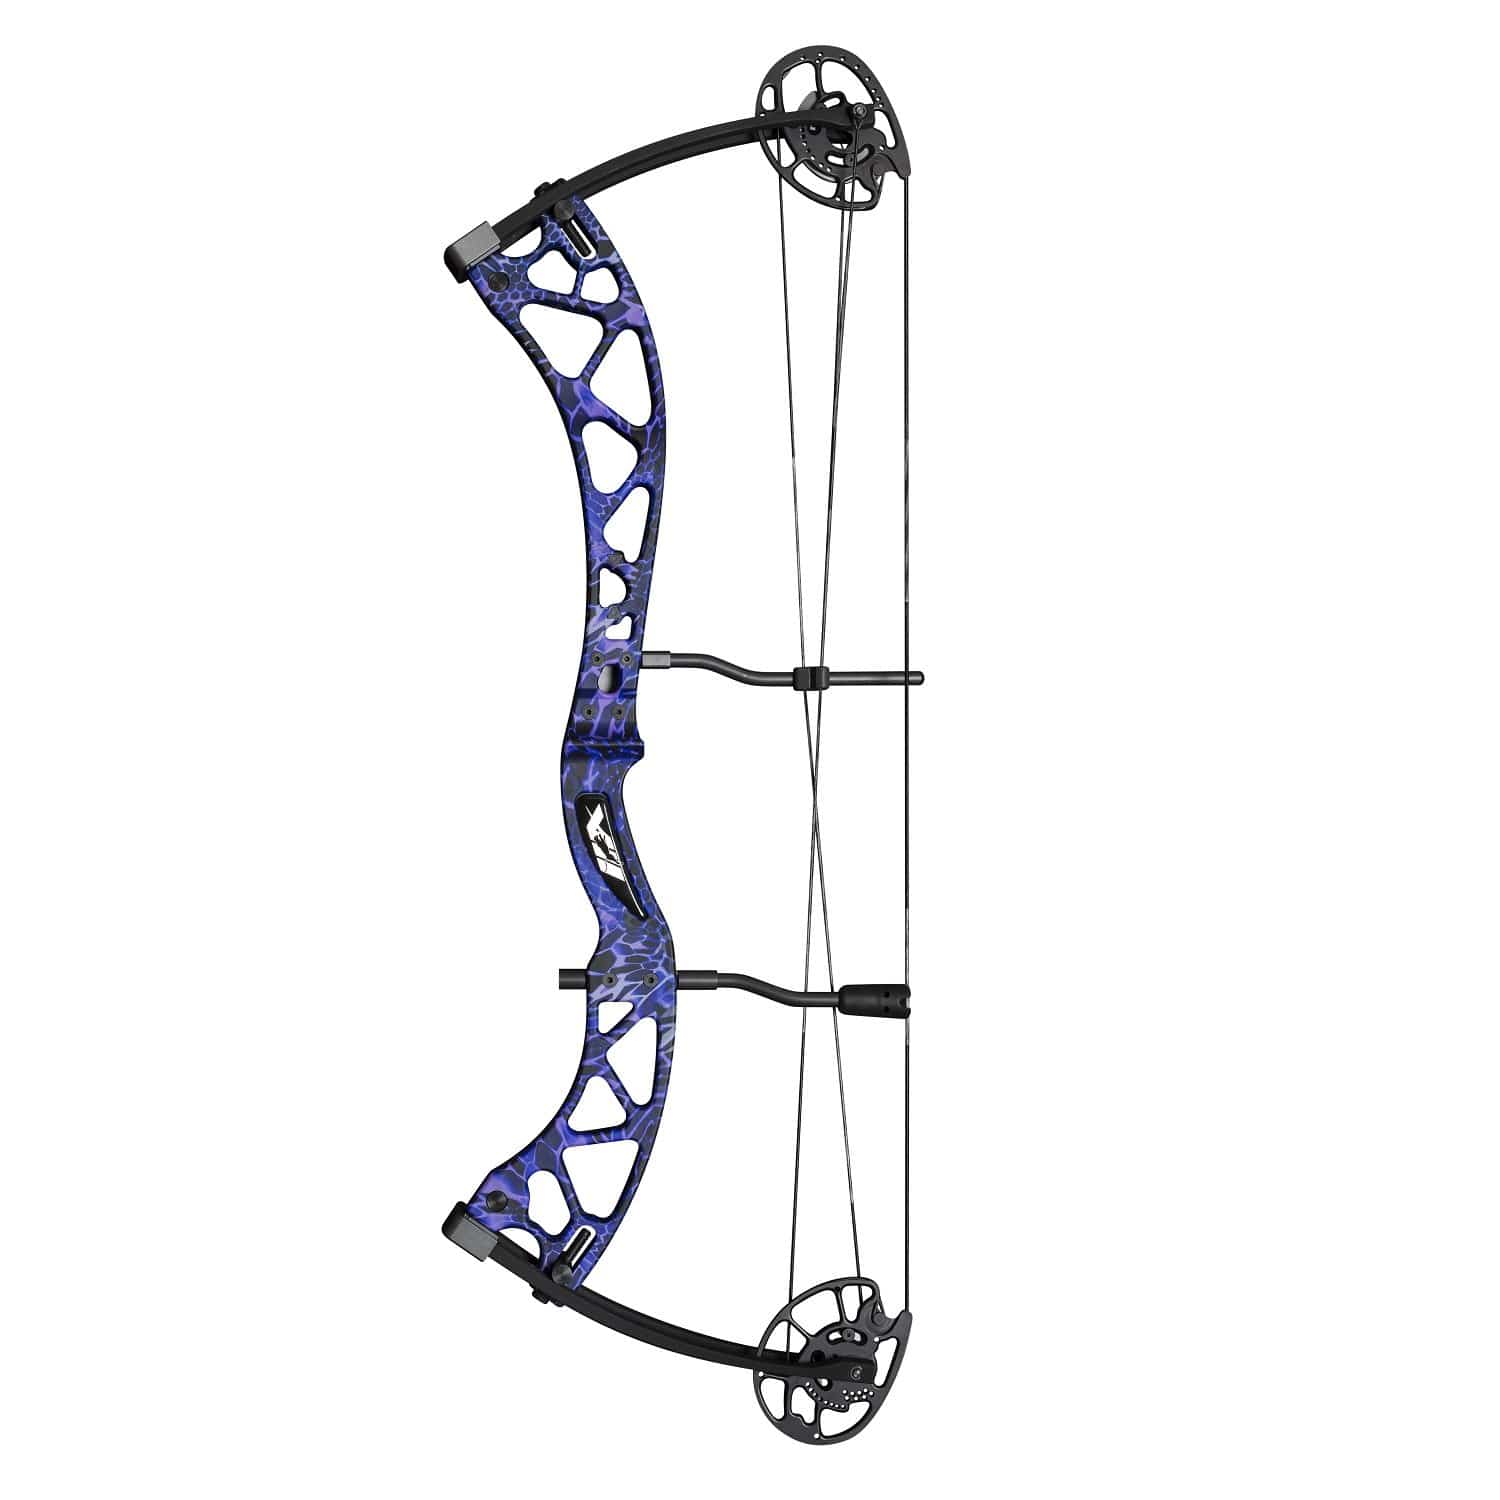 Martin Archery Archery : Compound Bow Martin Archery Carbon Mist Compound Bow RH Pkg 40lb Purple